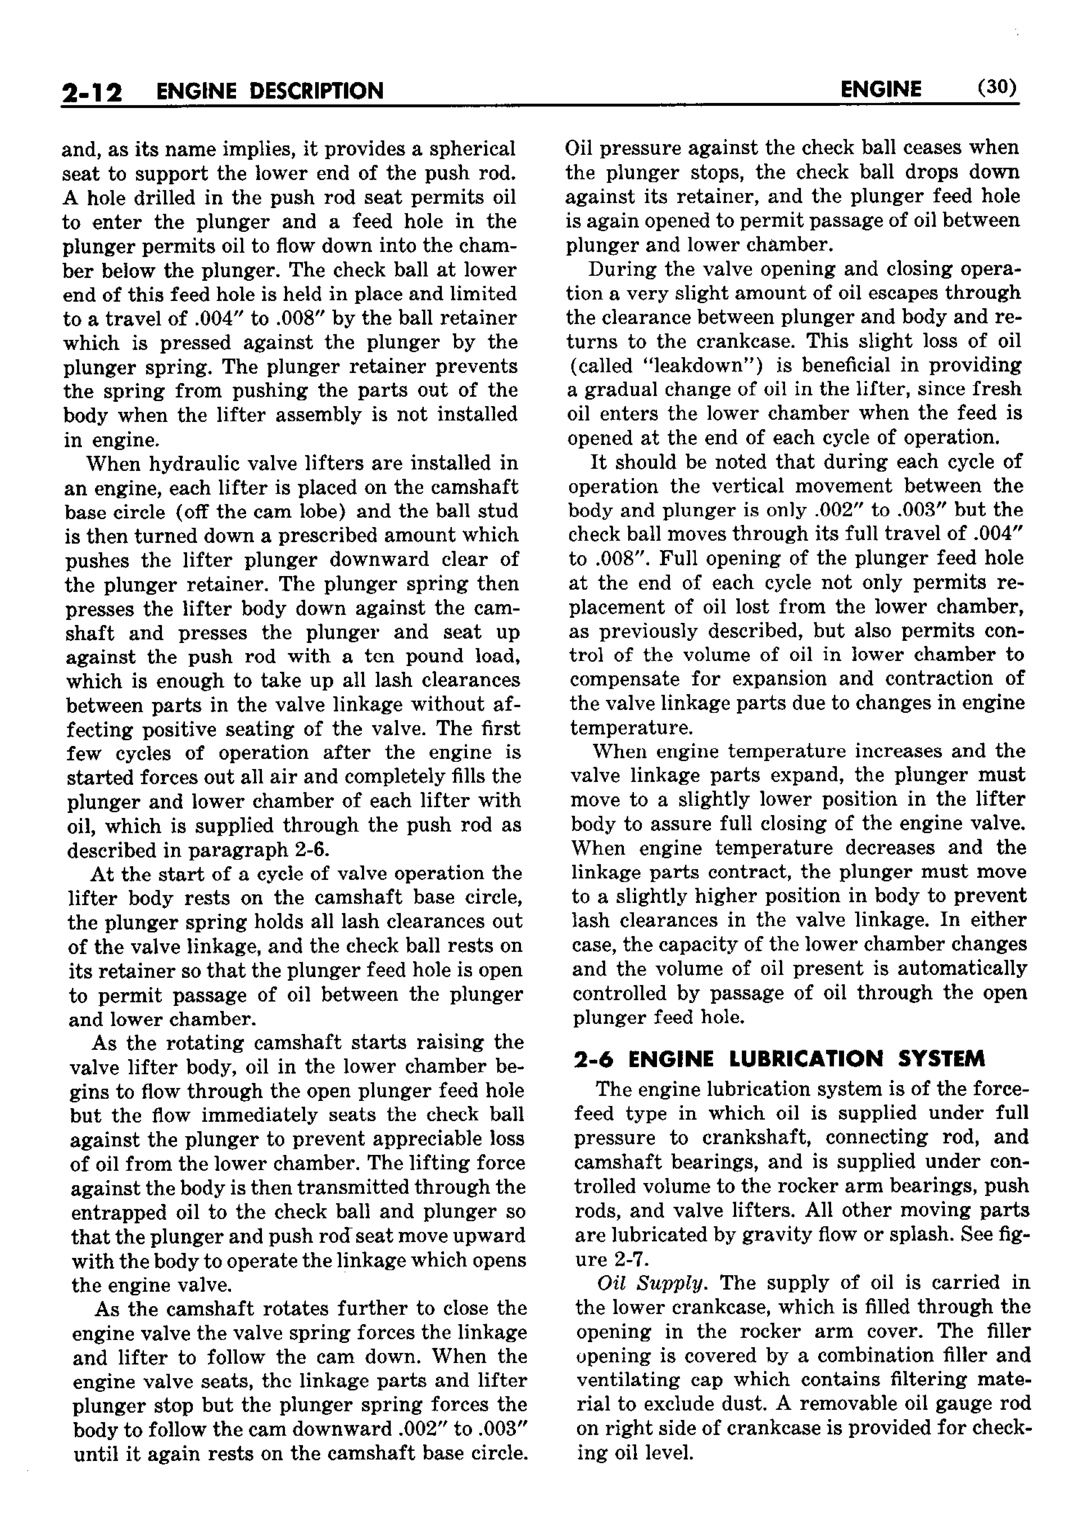 n_03 1952 Buick Shop Manual - Engine-012-012.jpg